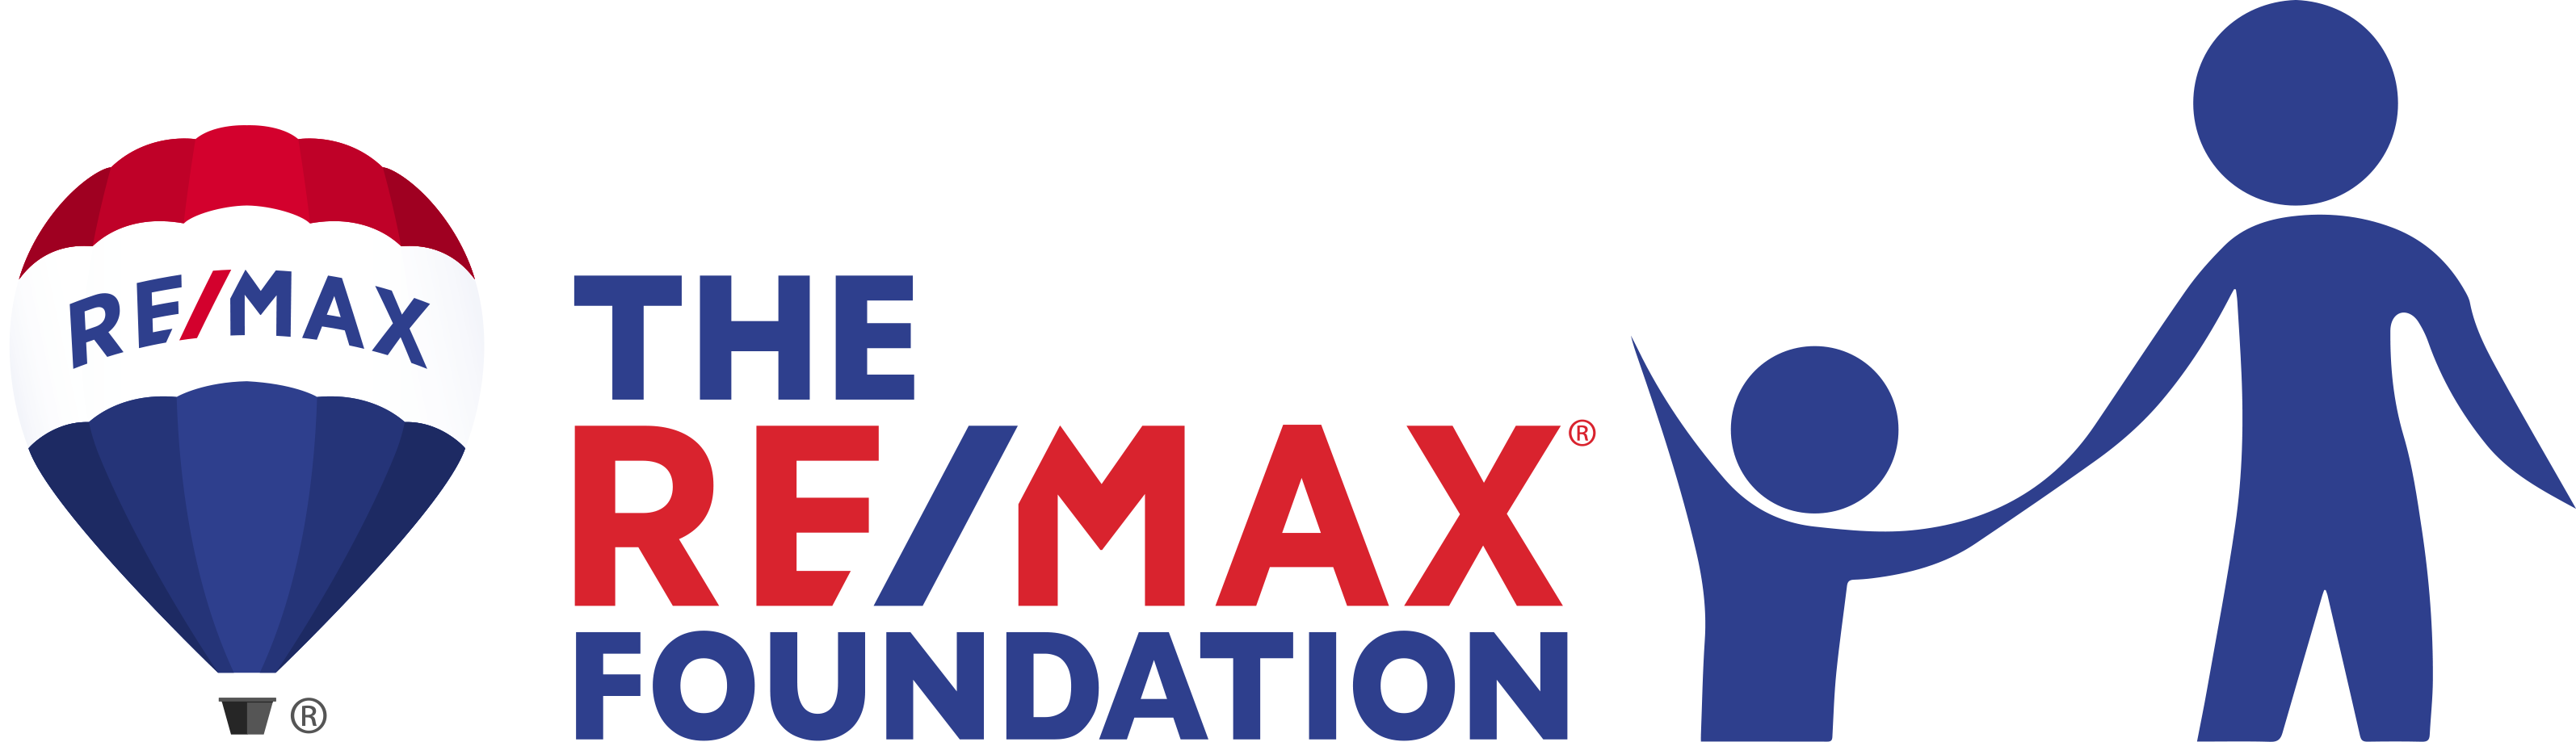 Foundation logo landscape